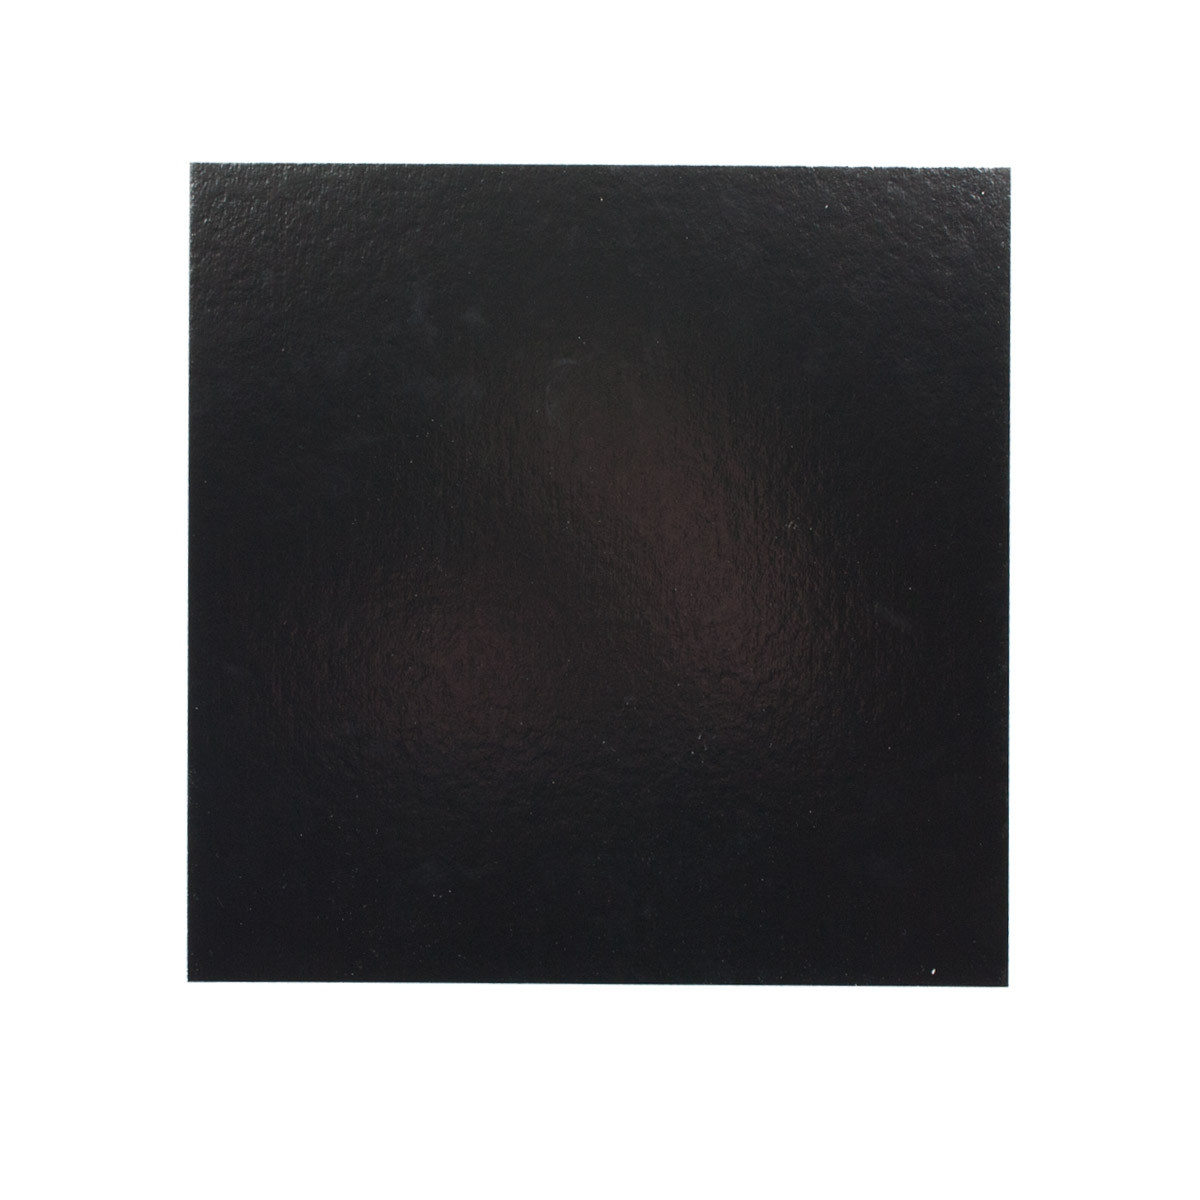 Taartkarton Vierkant Goud/Zwart 20x20cm per stuk